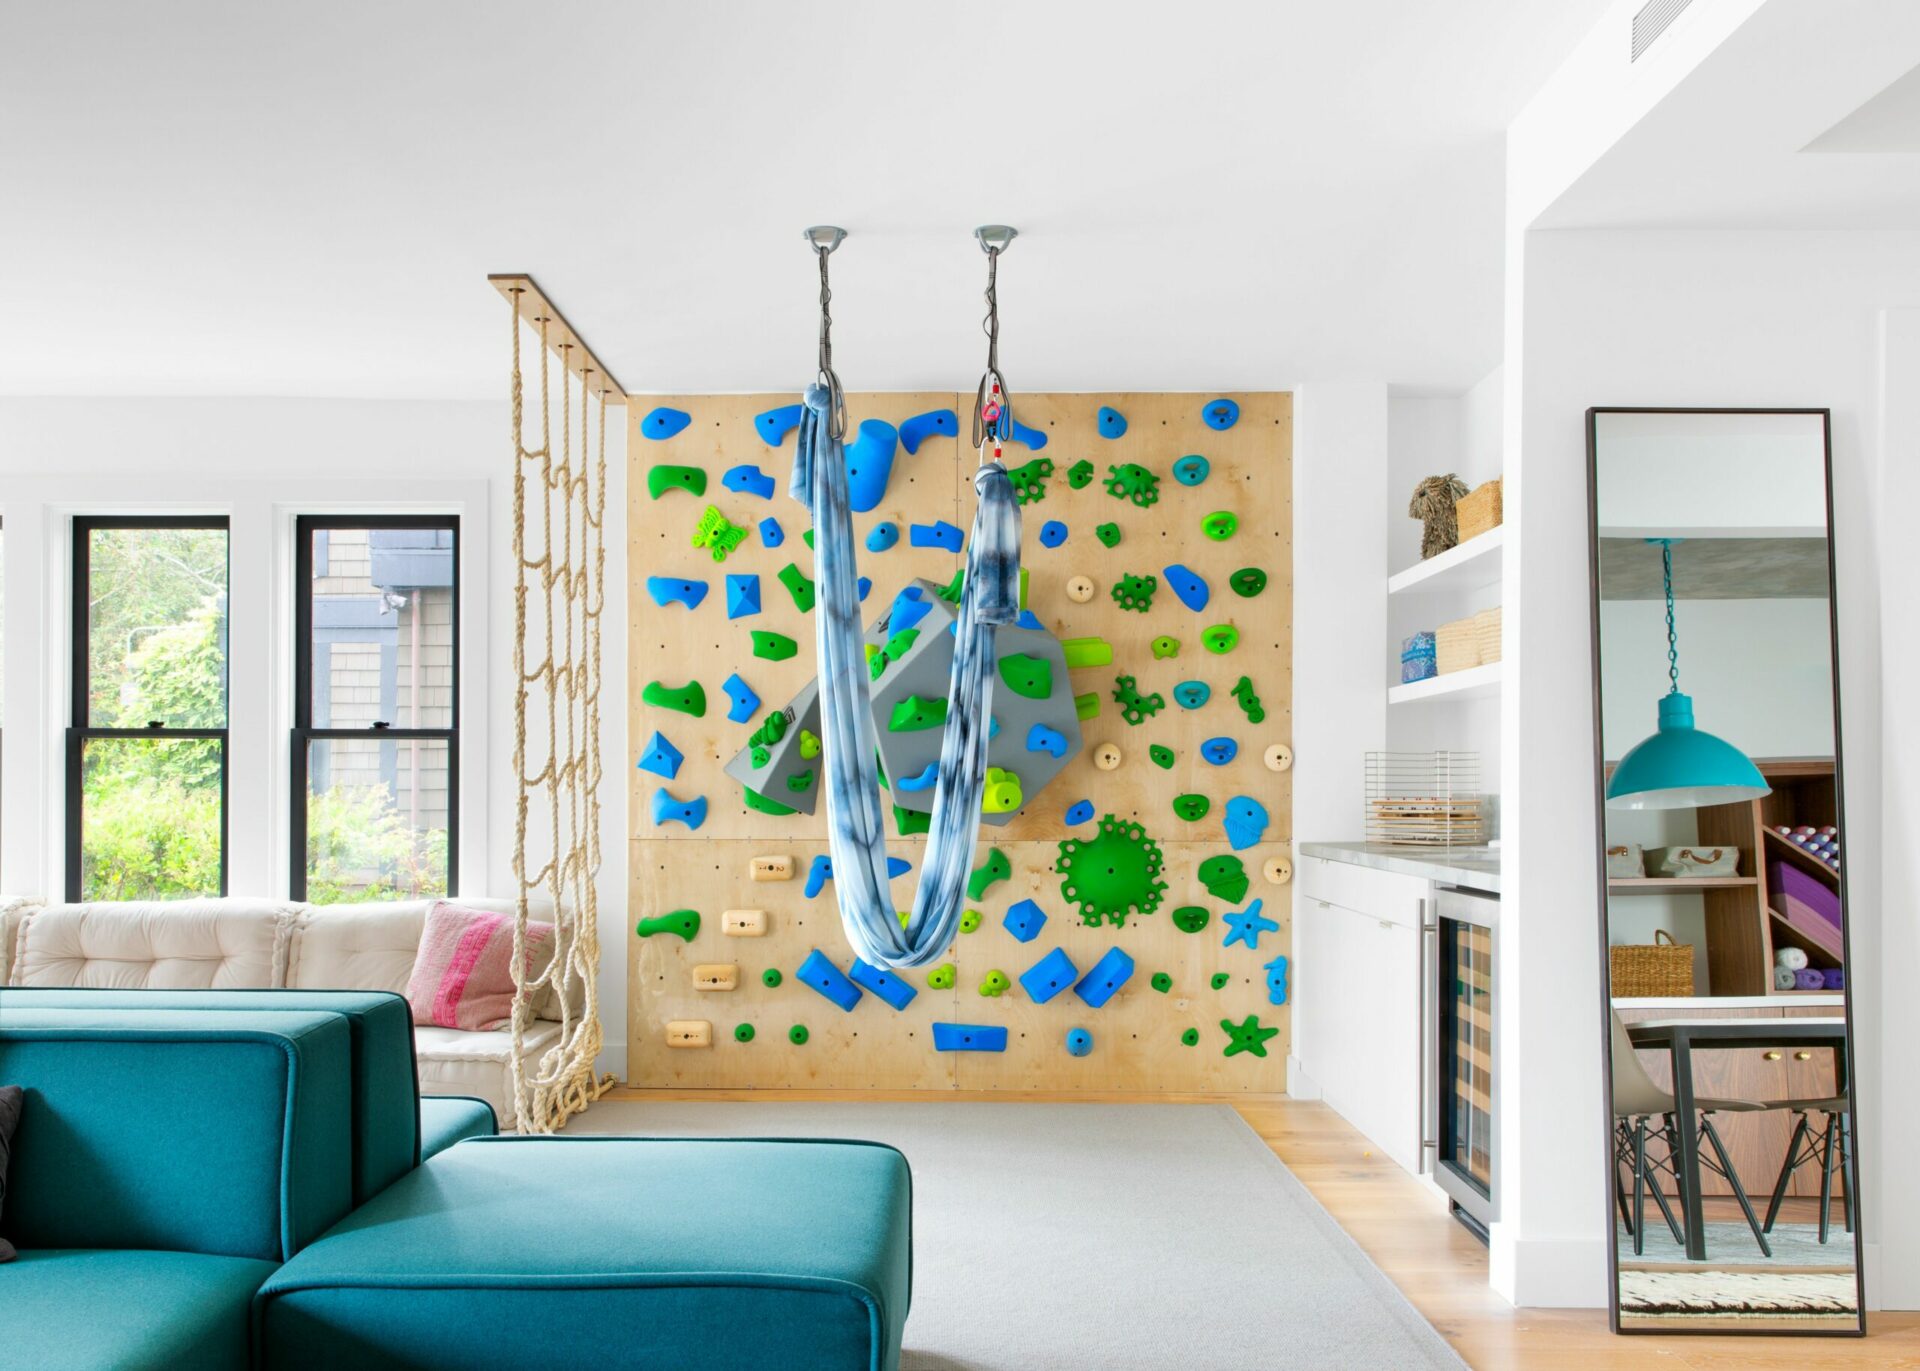 Creative Design Ideas For Kids’ Home Climbing Walls